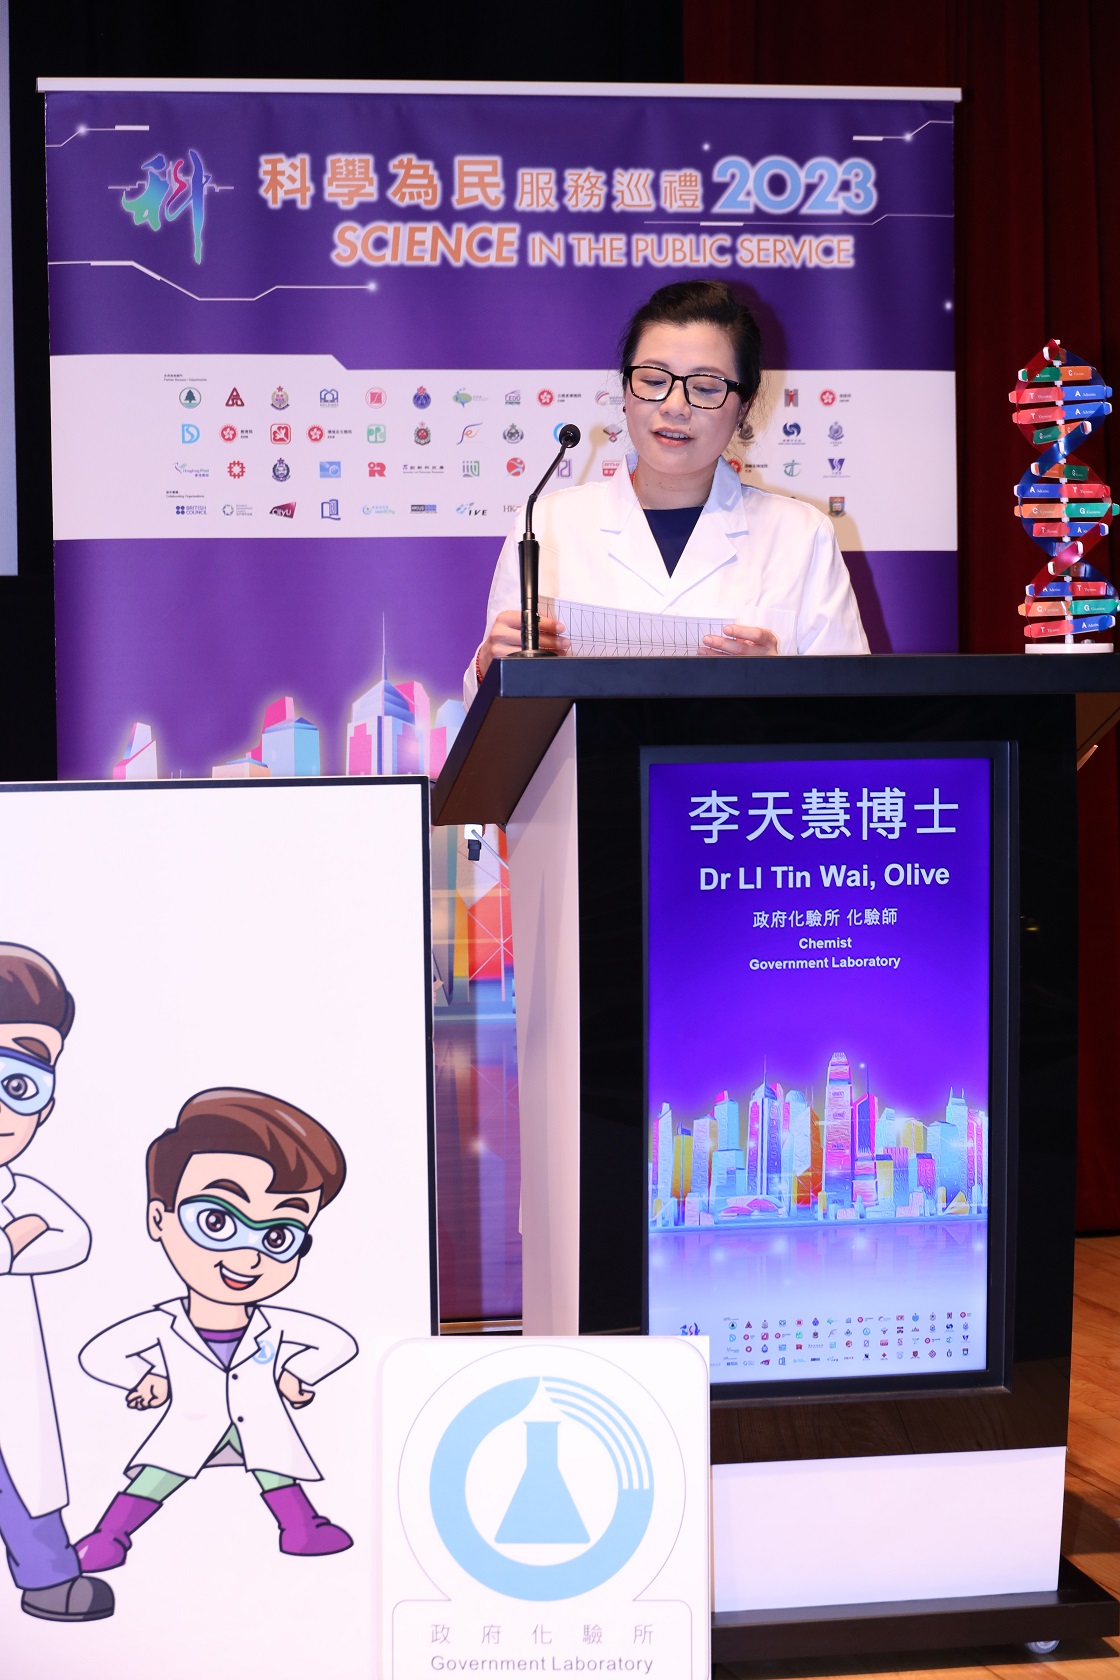 Dr. LI Tin-wai of the Government Laboratory gives presentation at the Hong Kong Science Museum